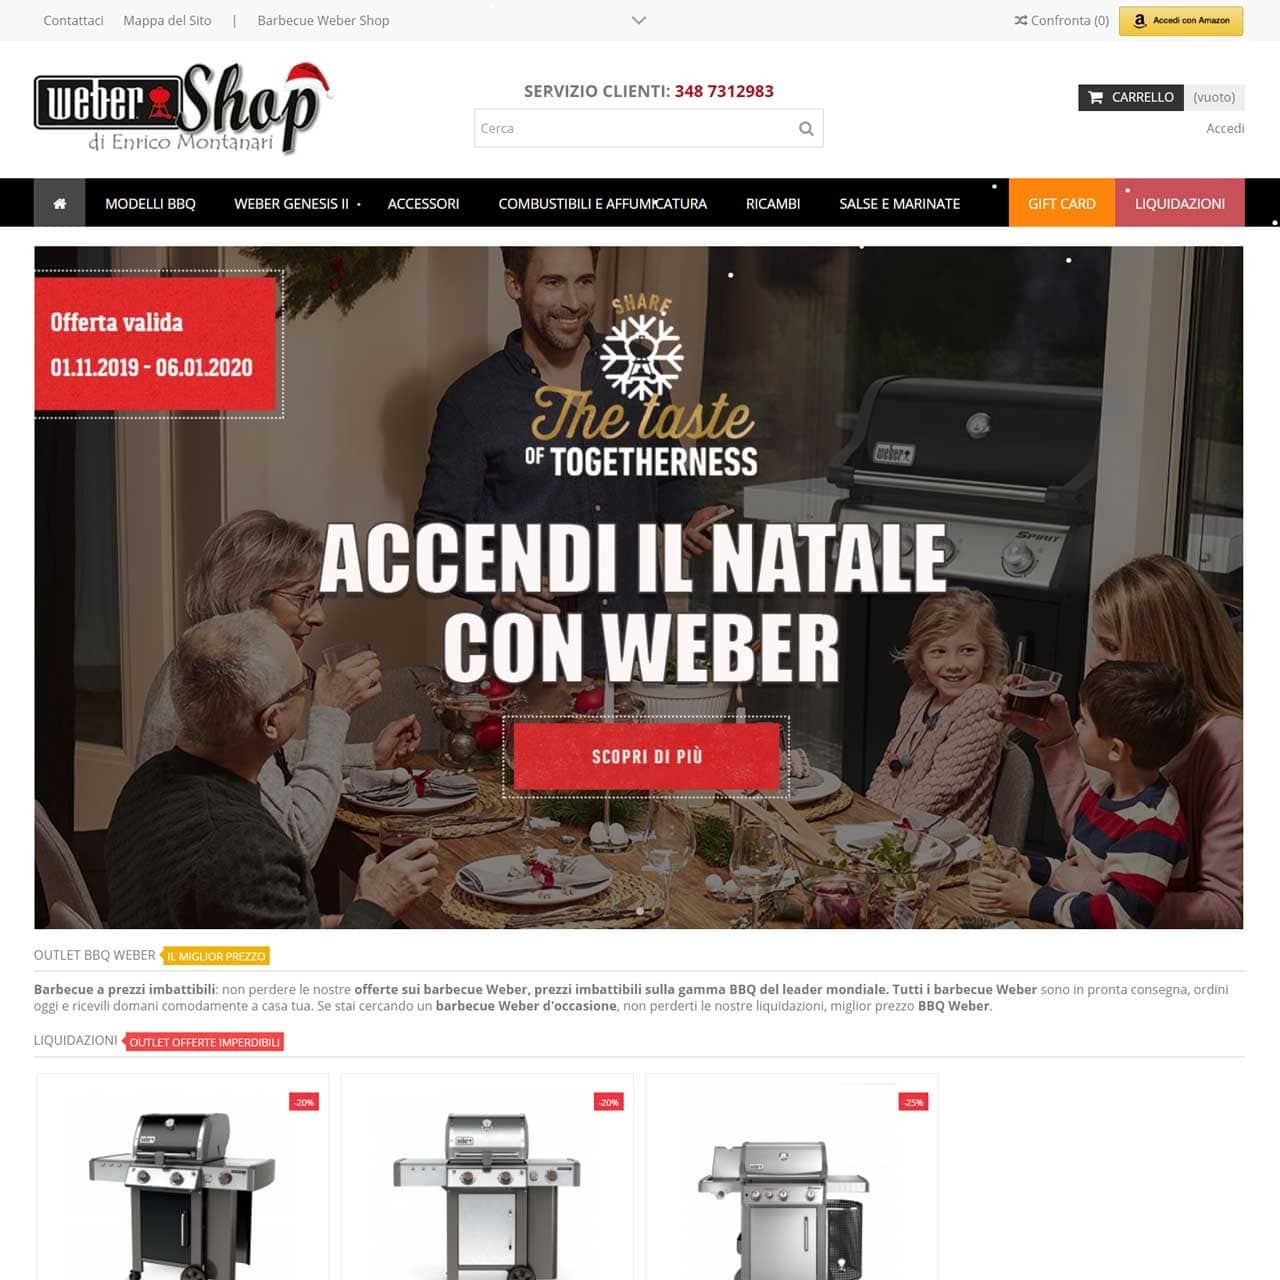 Creation of Barbecue Web Shop e-commerce